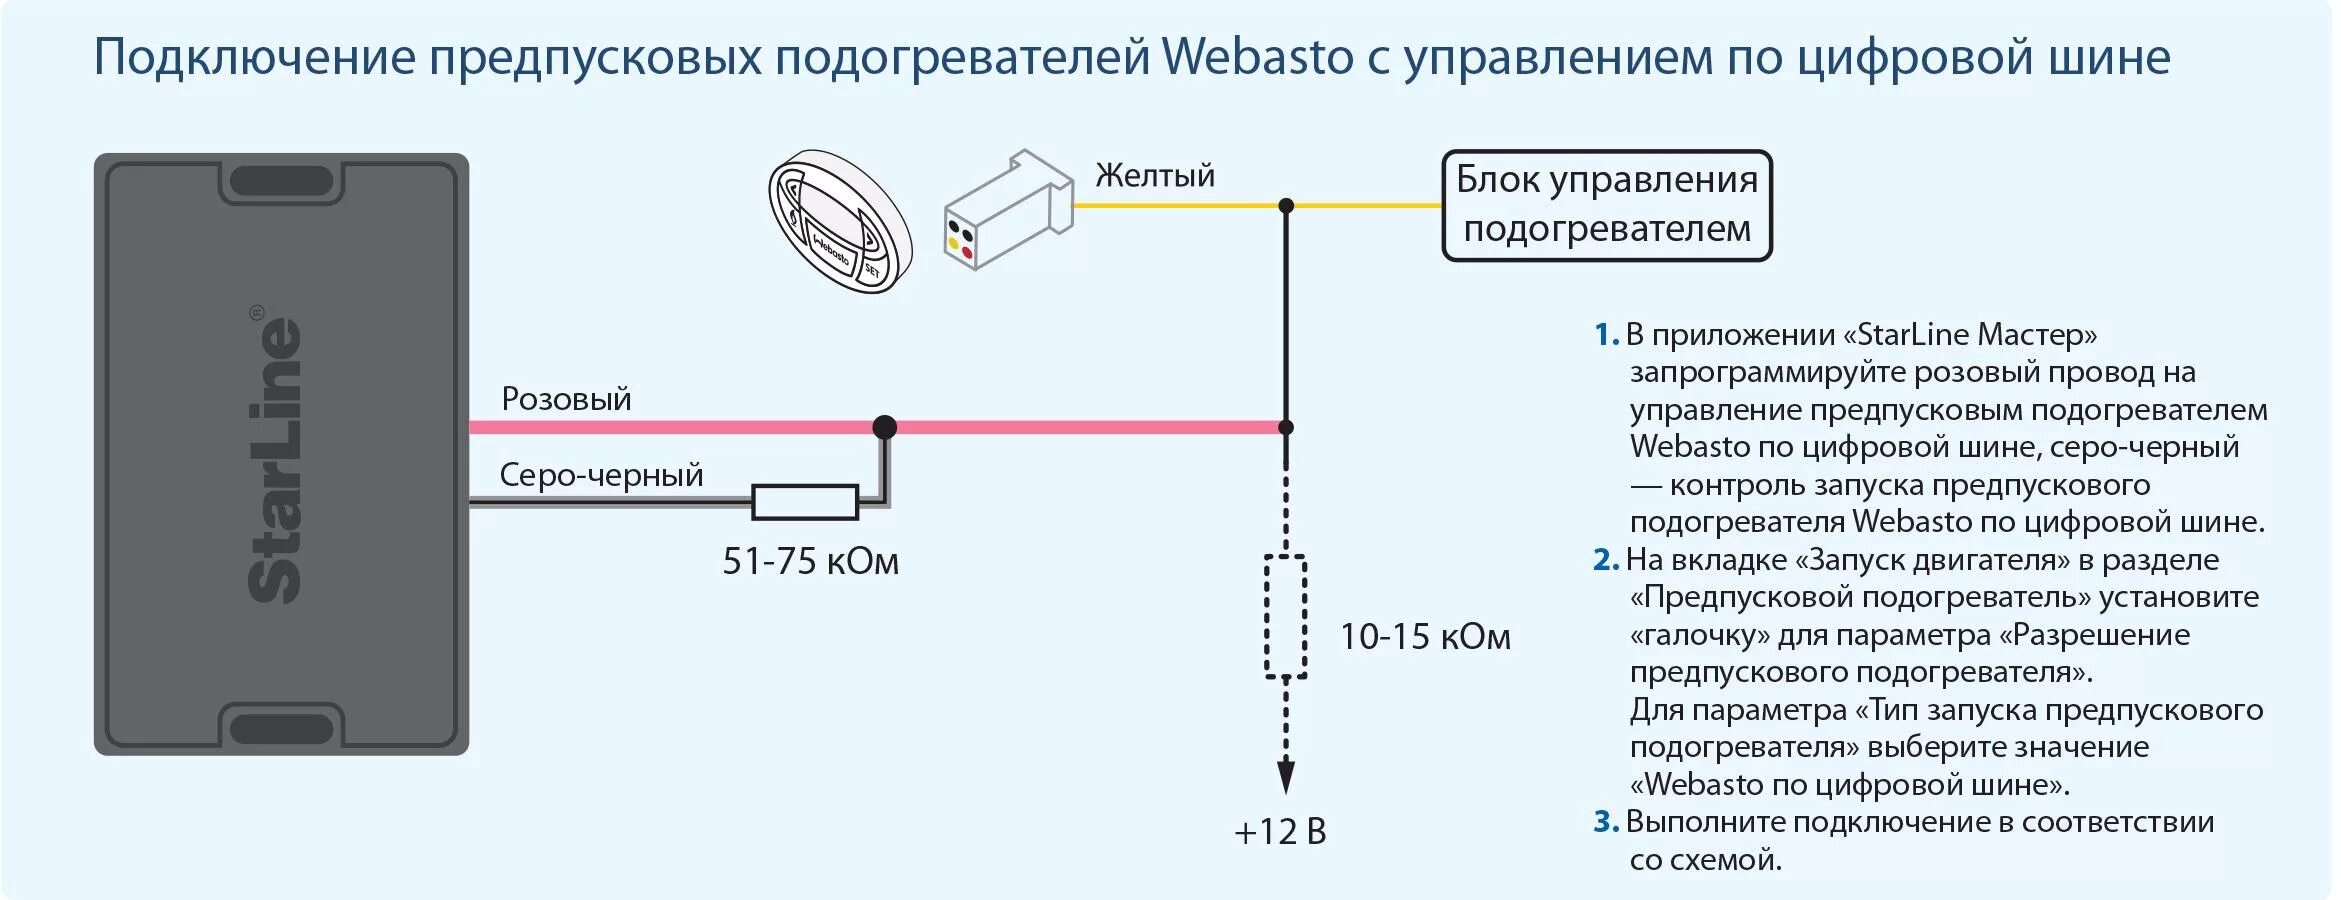 Схема подключения вебасто к старлайн а93. STARLINE 2 С Webasto. Подключить вебасто к старлайн с 96 схема подключения. Схема подключения вебасто к сигнализации. Как установить старлайн на телефон